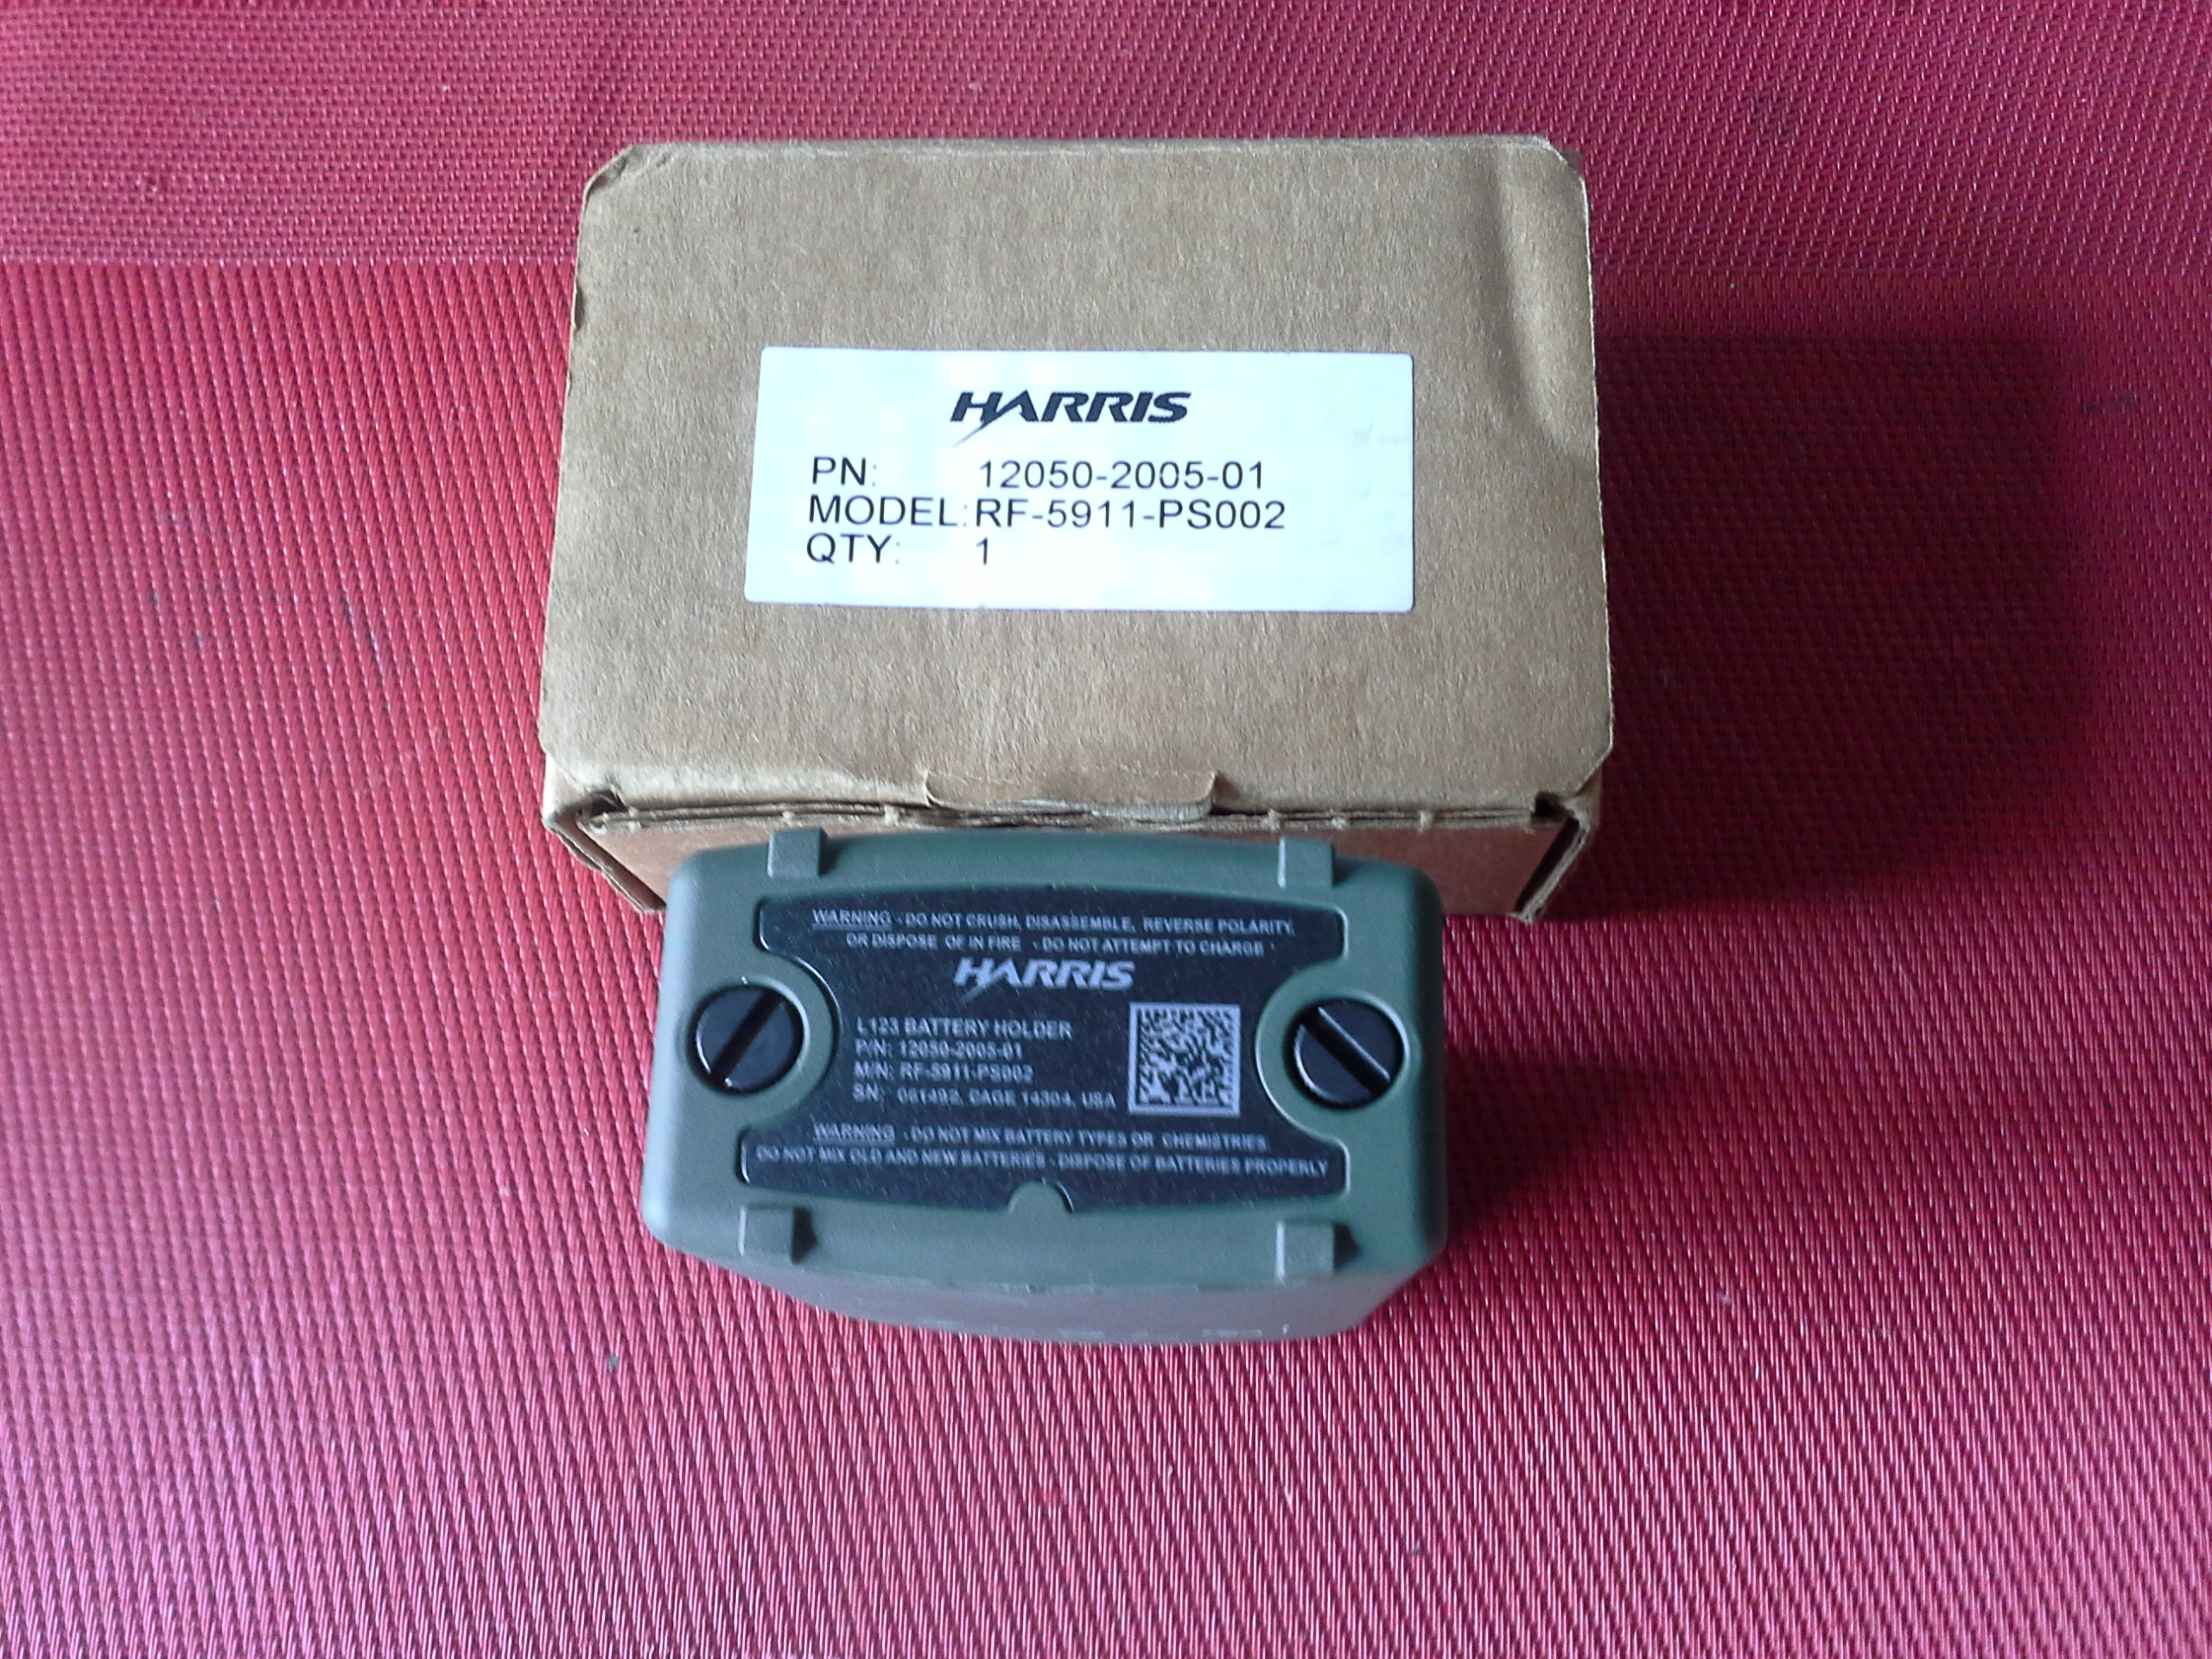 Batteriebehälter, Harris Funkgerät PRC-152